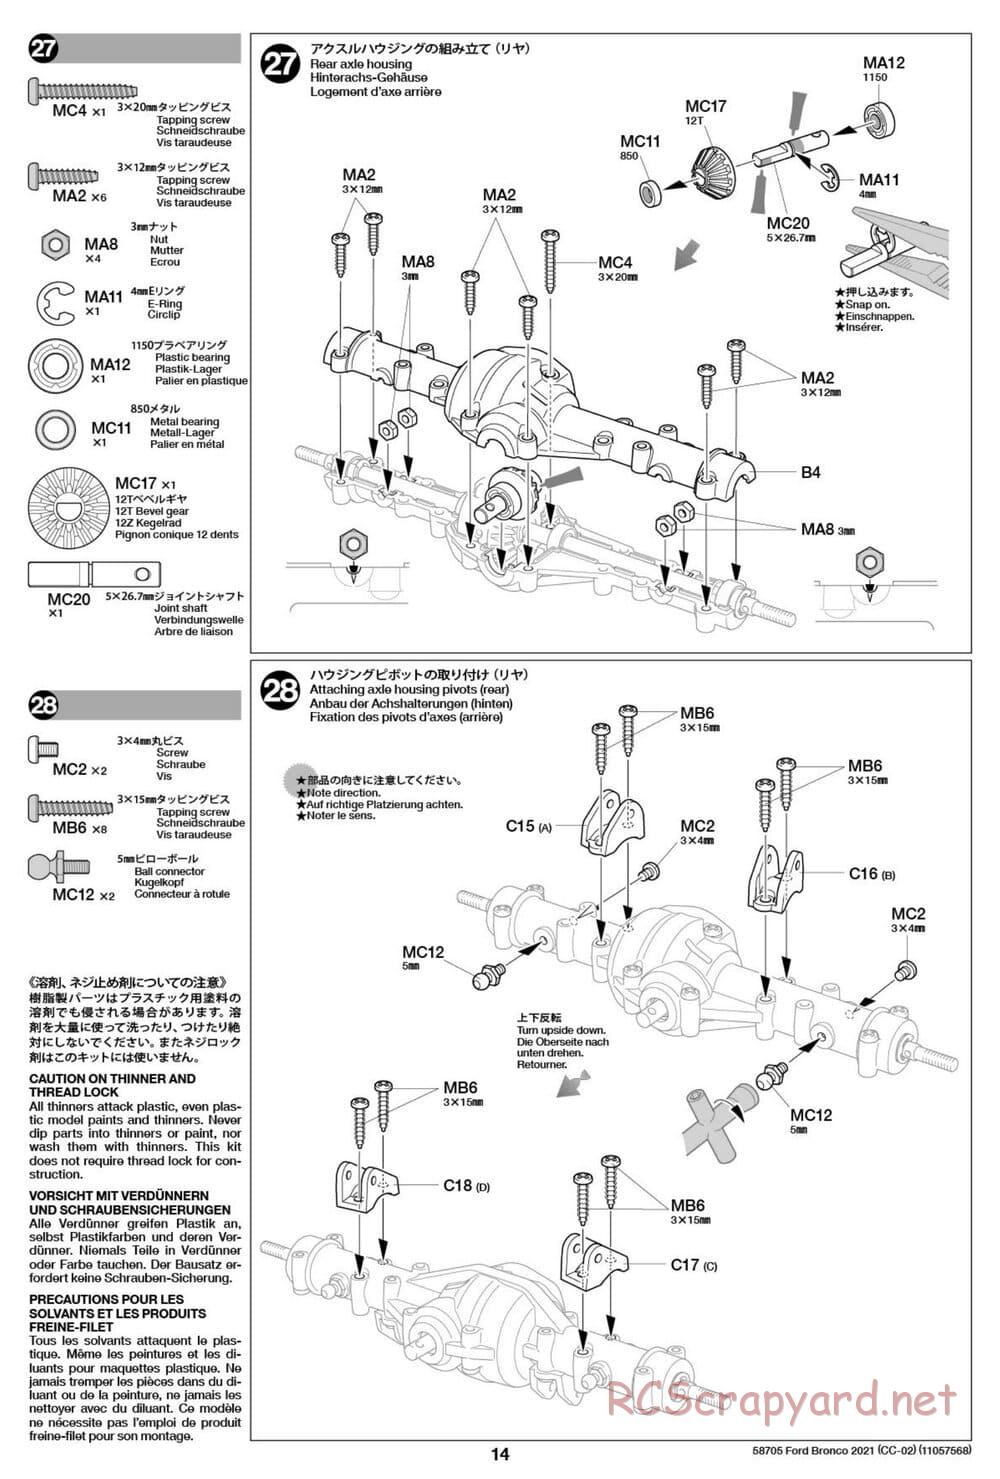 Tamiya - Ford Bronco 2021 - CC-02 Chassis - Manual - Page 14